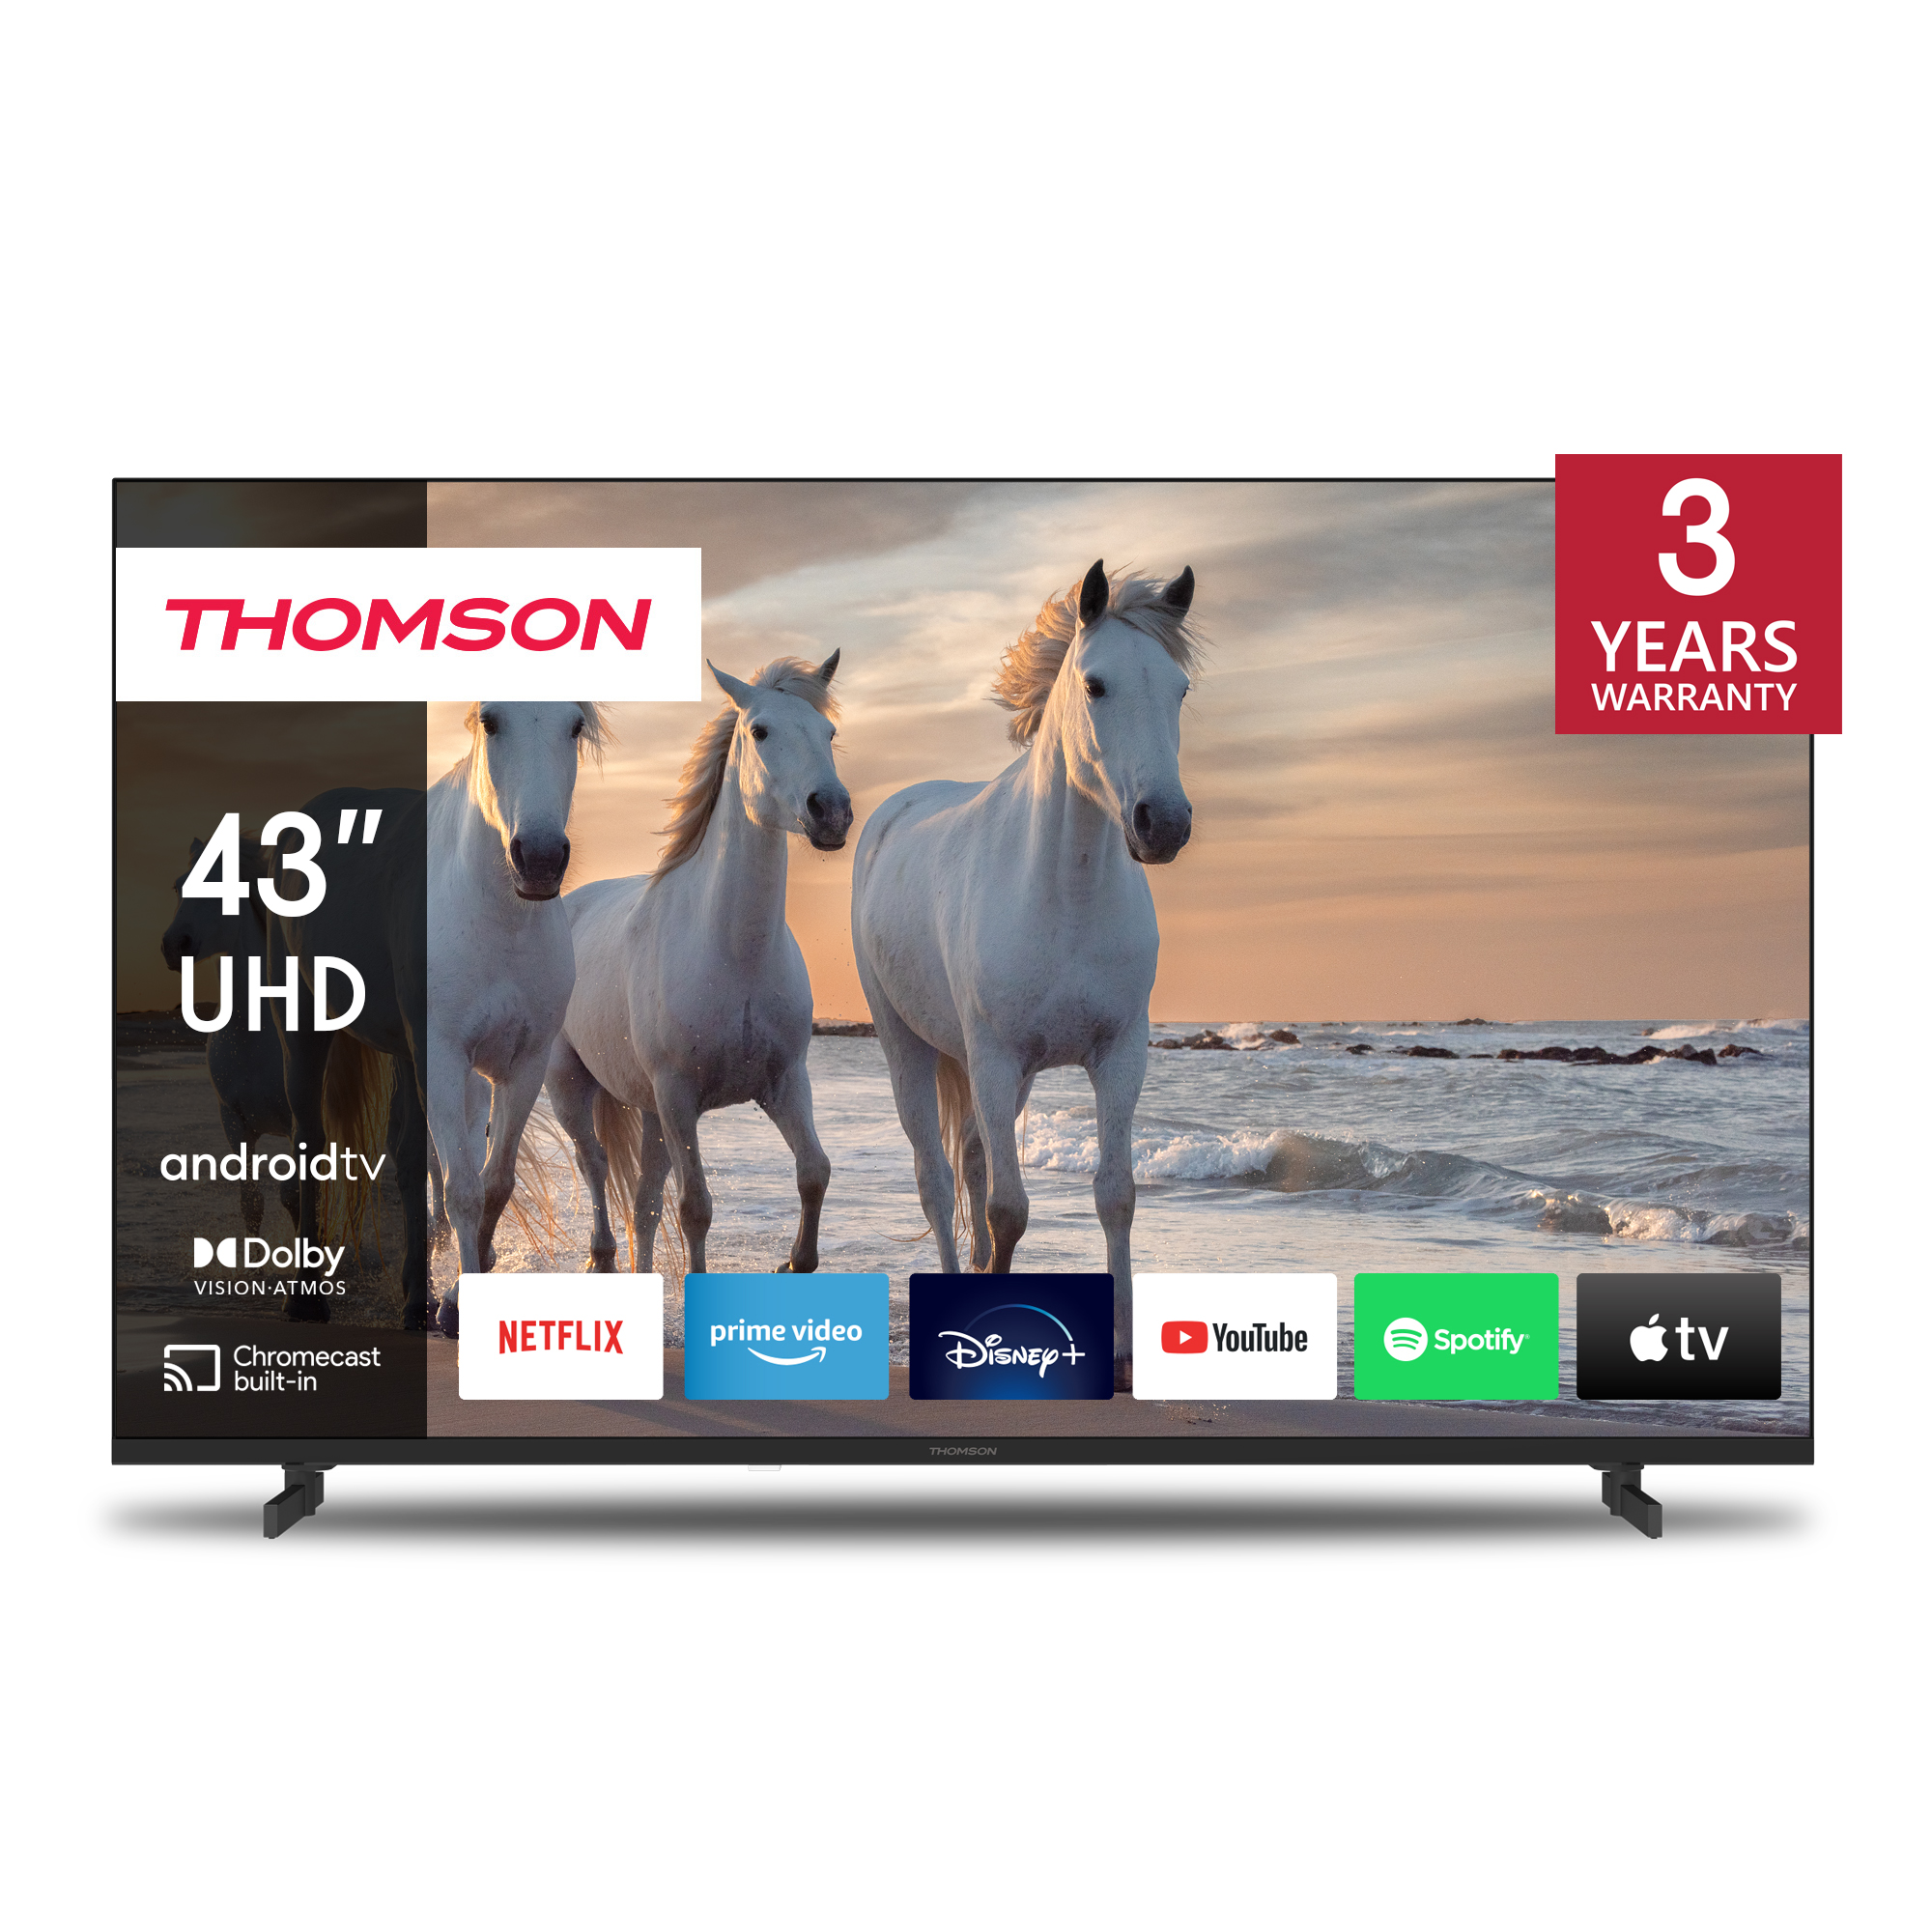 Pantalla Hisense 43 Pulgadas UHD 4K Smart TV a precio de socio